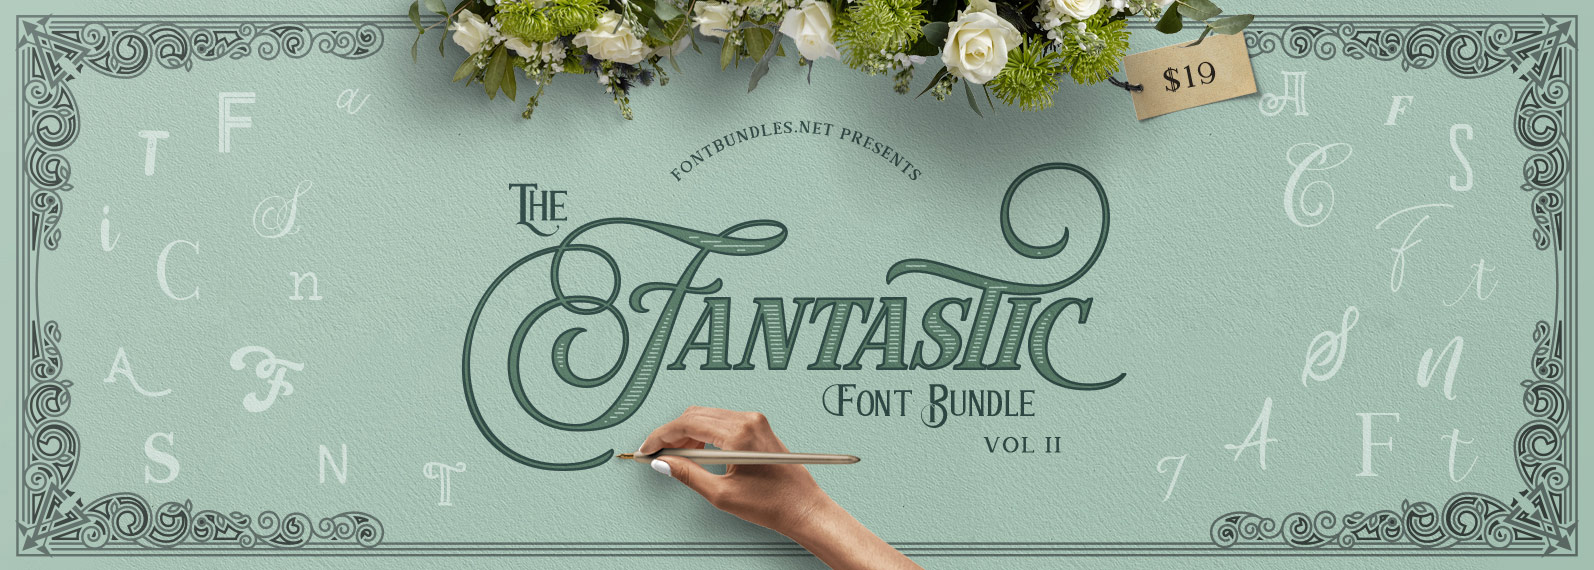 The Fantastic Font Bundle II Cover